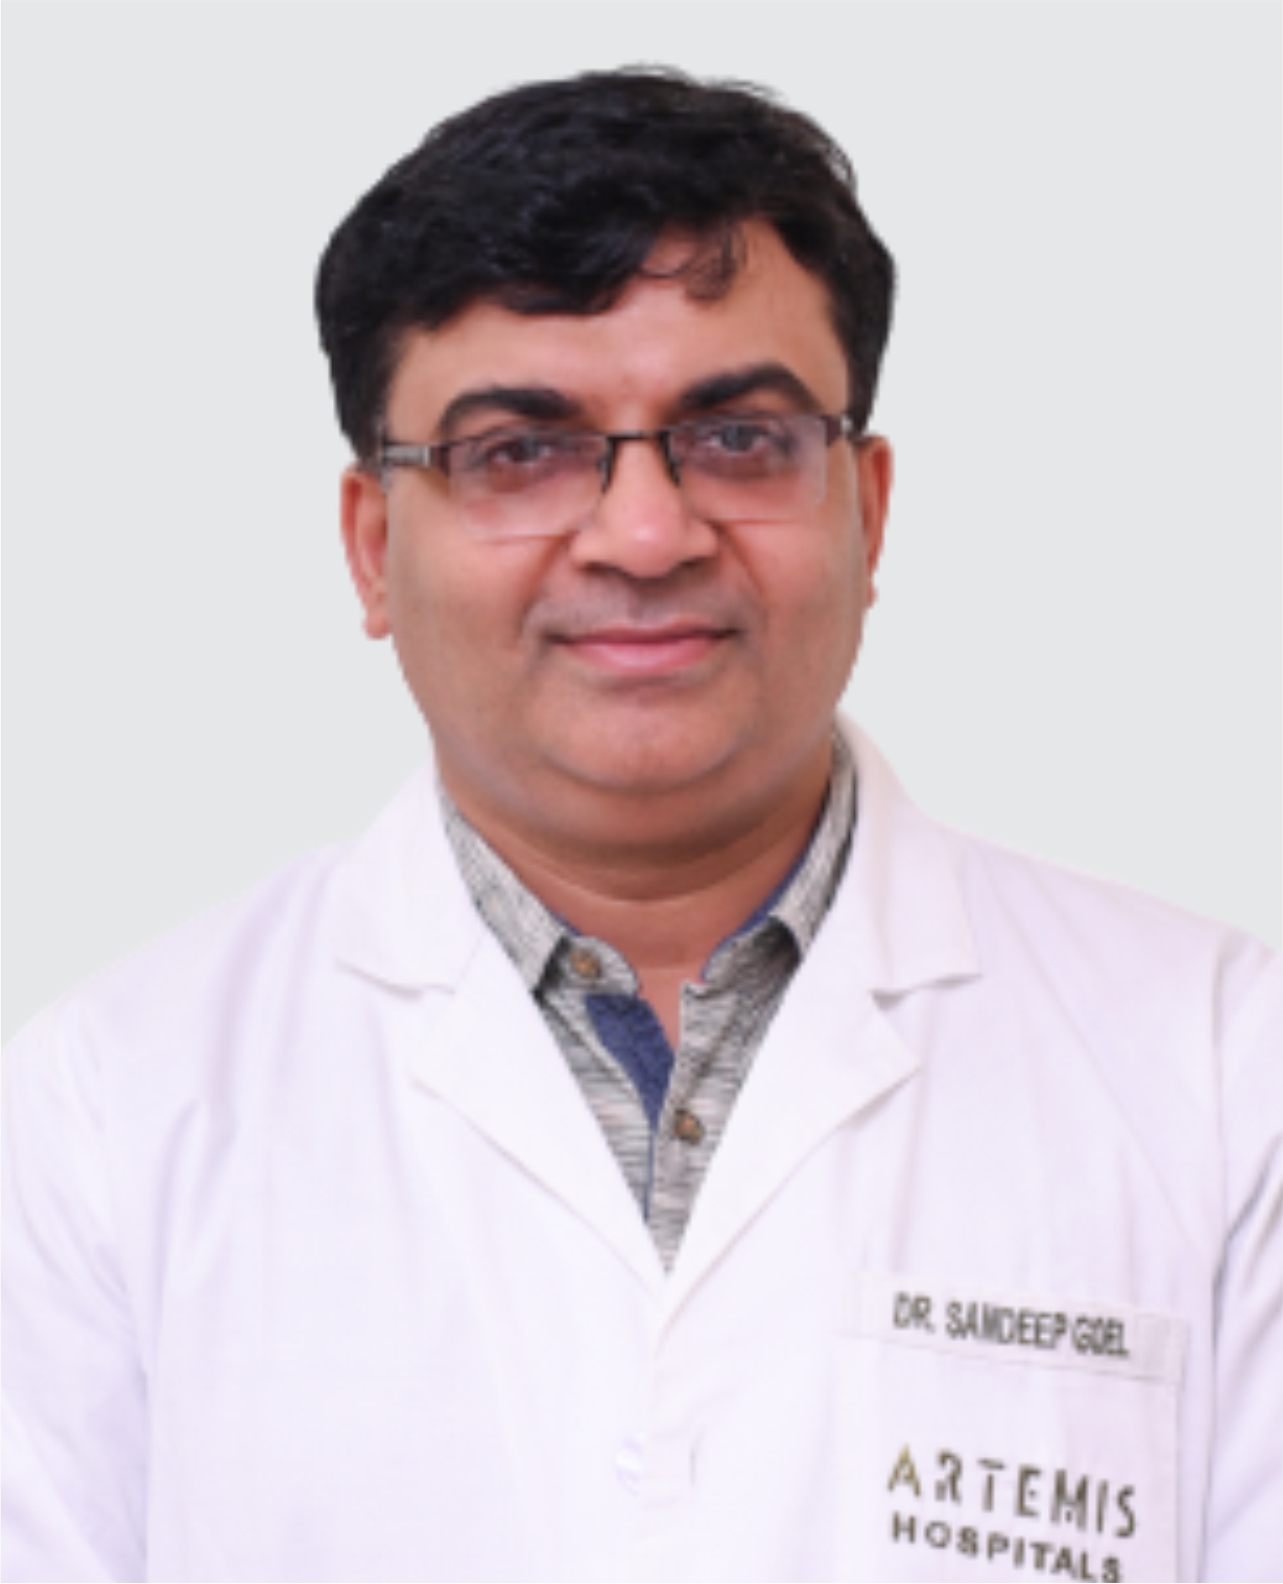 Dr. Sandeep Goel